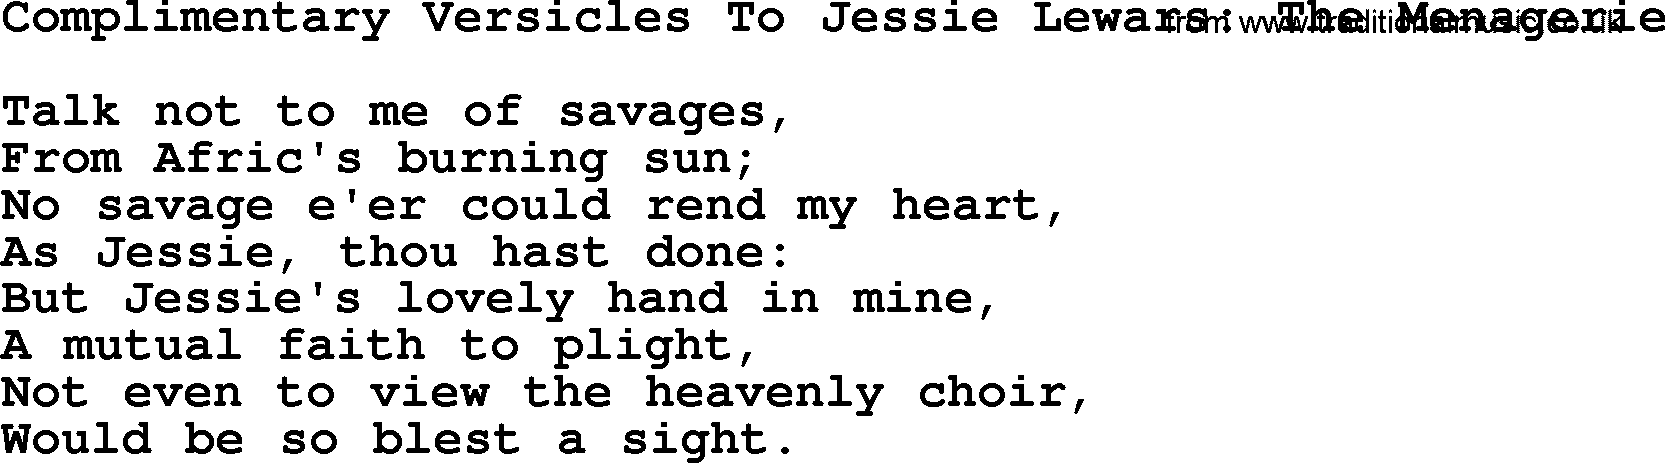 Robert Burns Songs & Lyrics: Complimentary Versicles To Jessie Lewars The Menagerie